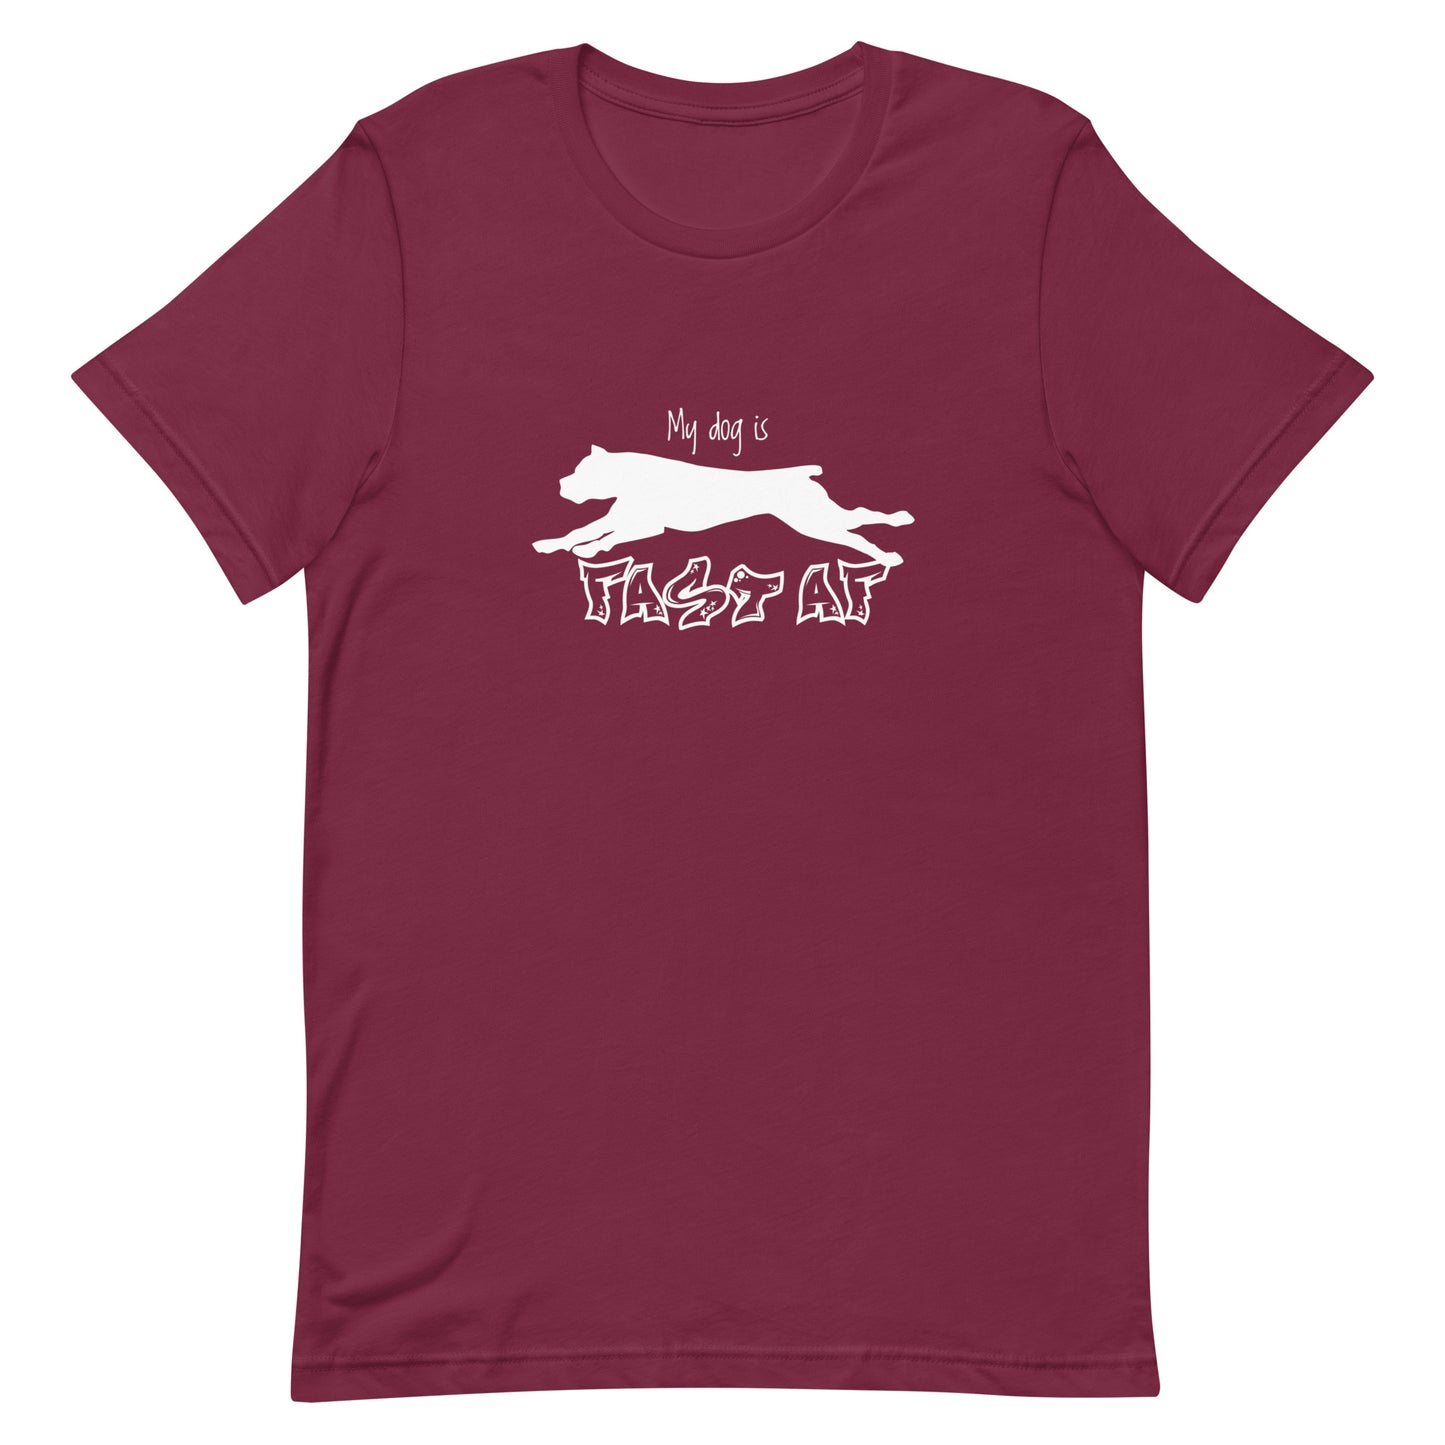 FAST AS AF - CANE CORSO -  Unisex t-shirt